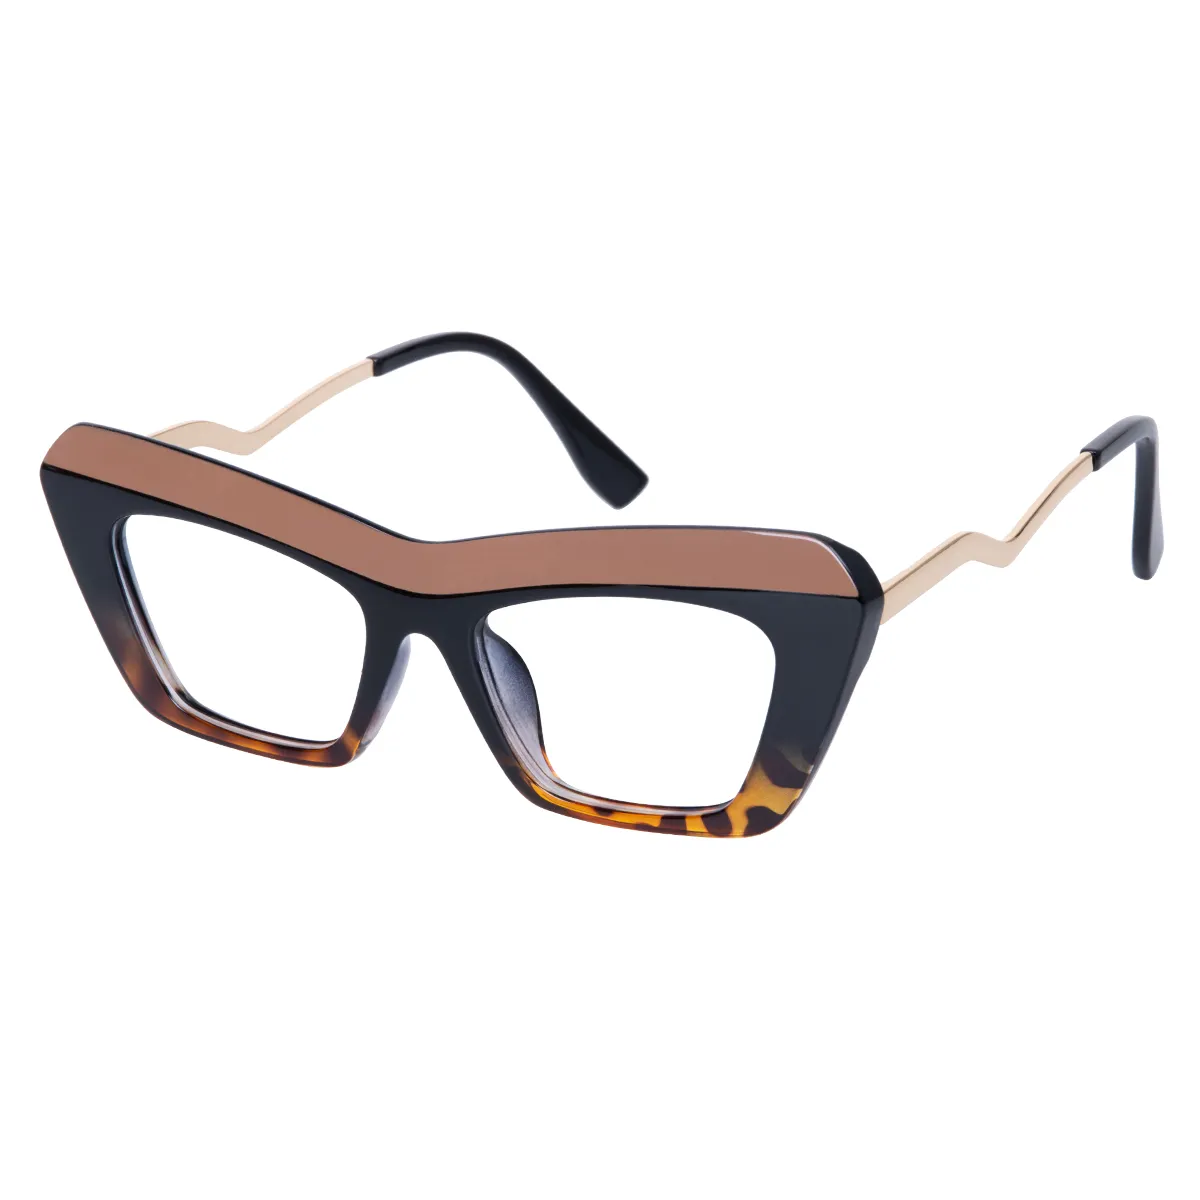 Elowen - Cat-eye Brown-Black Glasses for Women